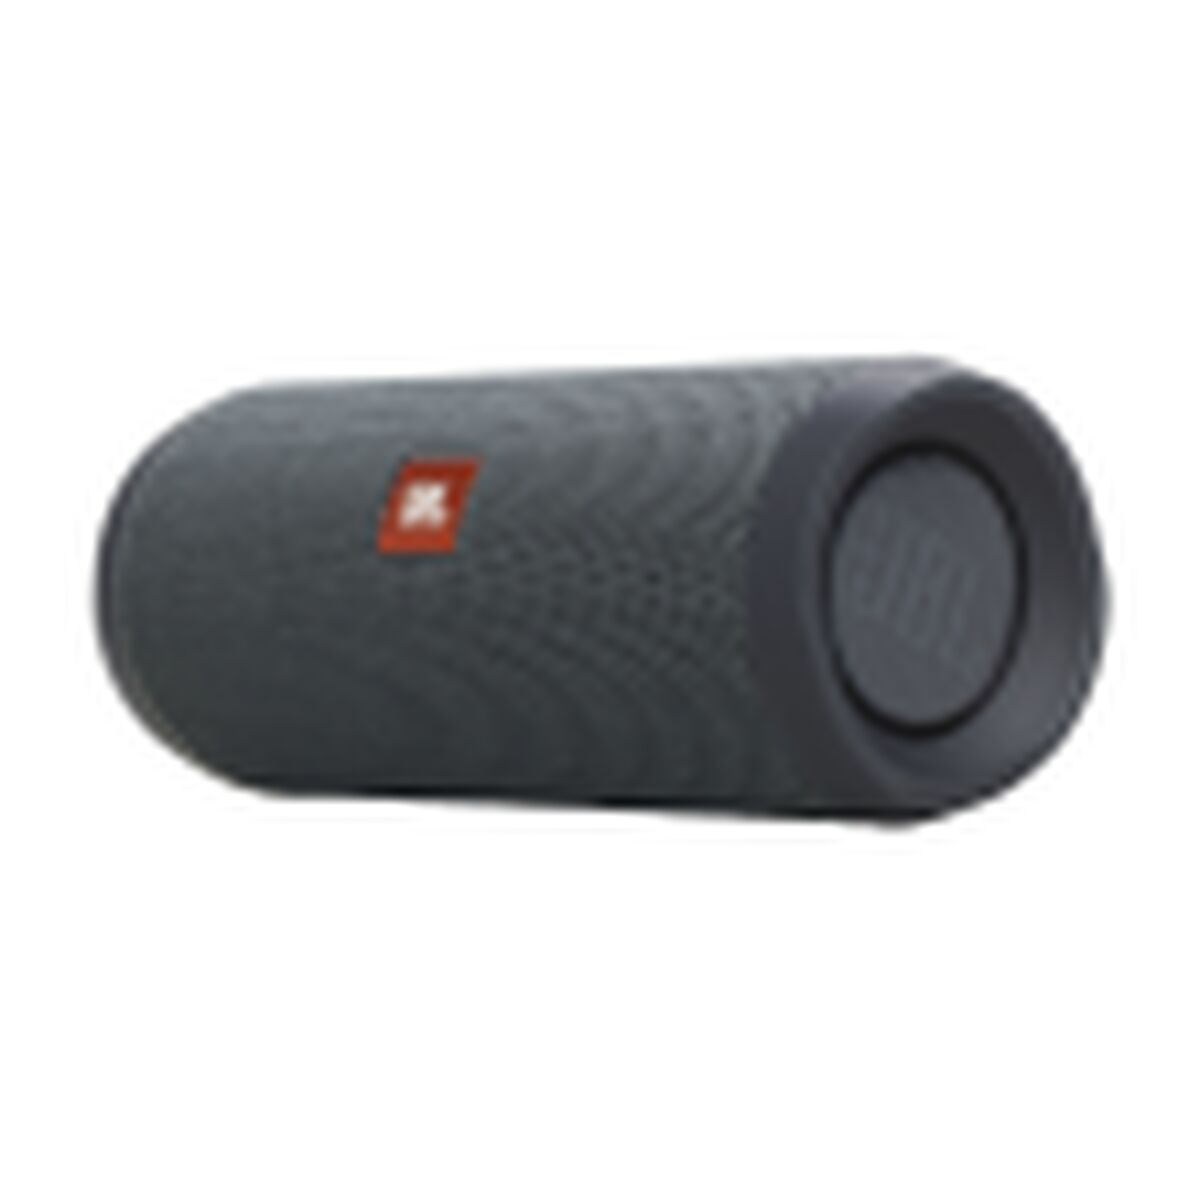 Kaufe Tragbare Bluetooth-Lautsprecher JBL JBLFLIPES2 Grau bei AWK Flagship um € 128.00